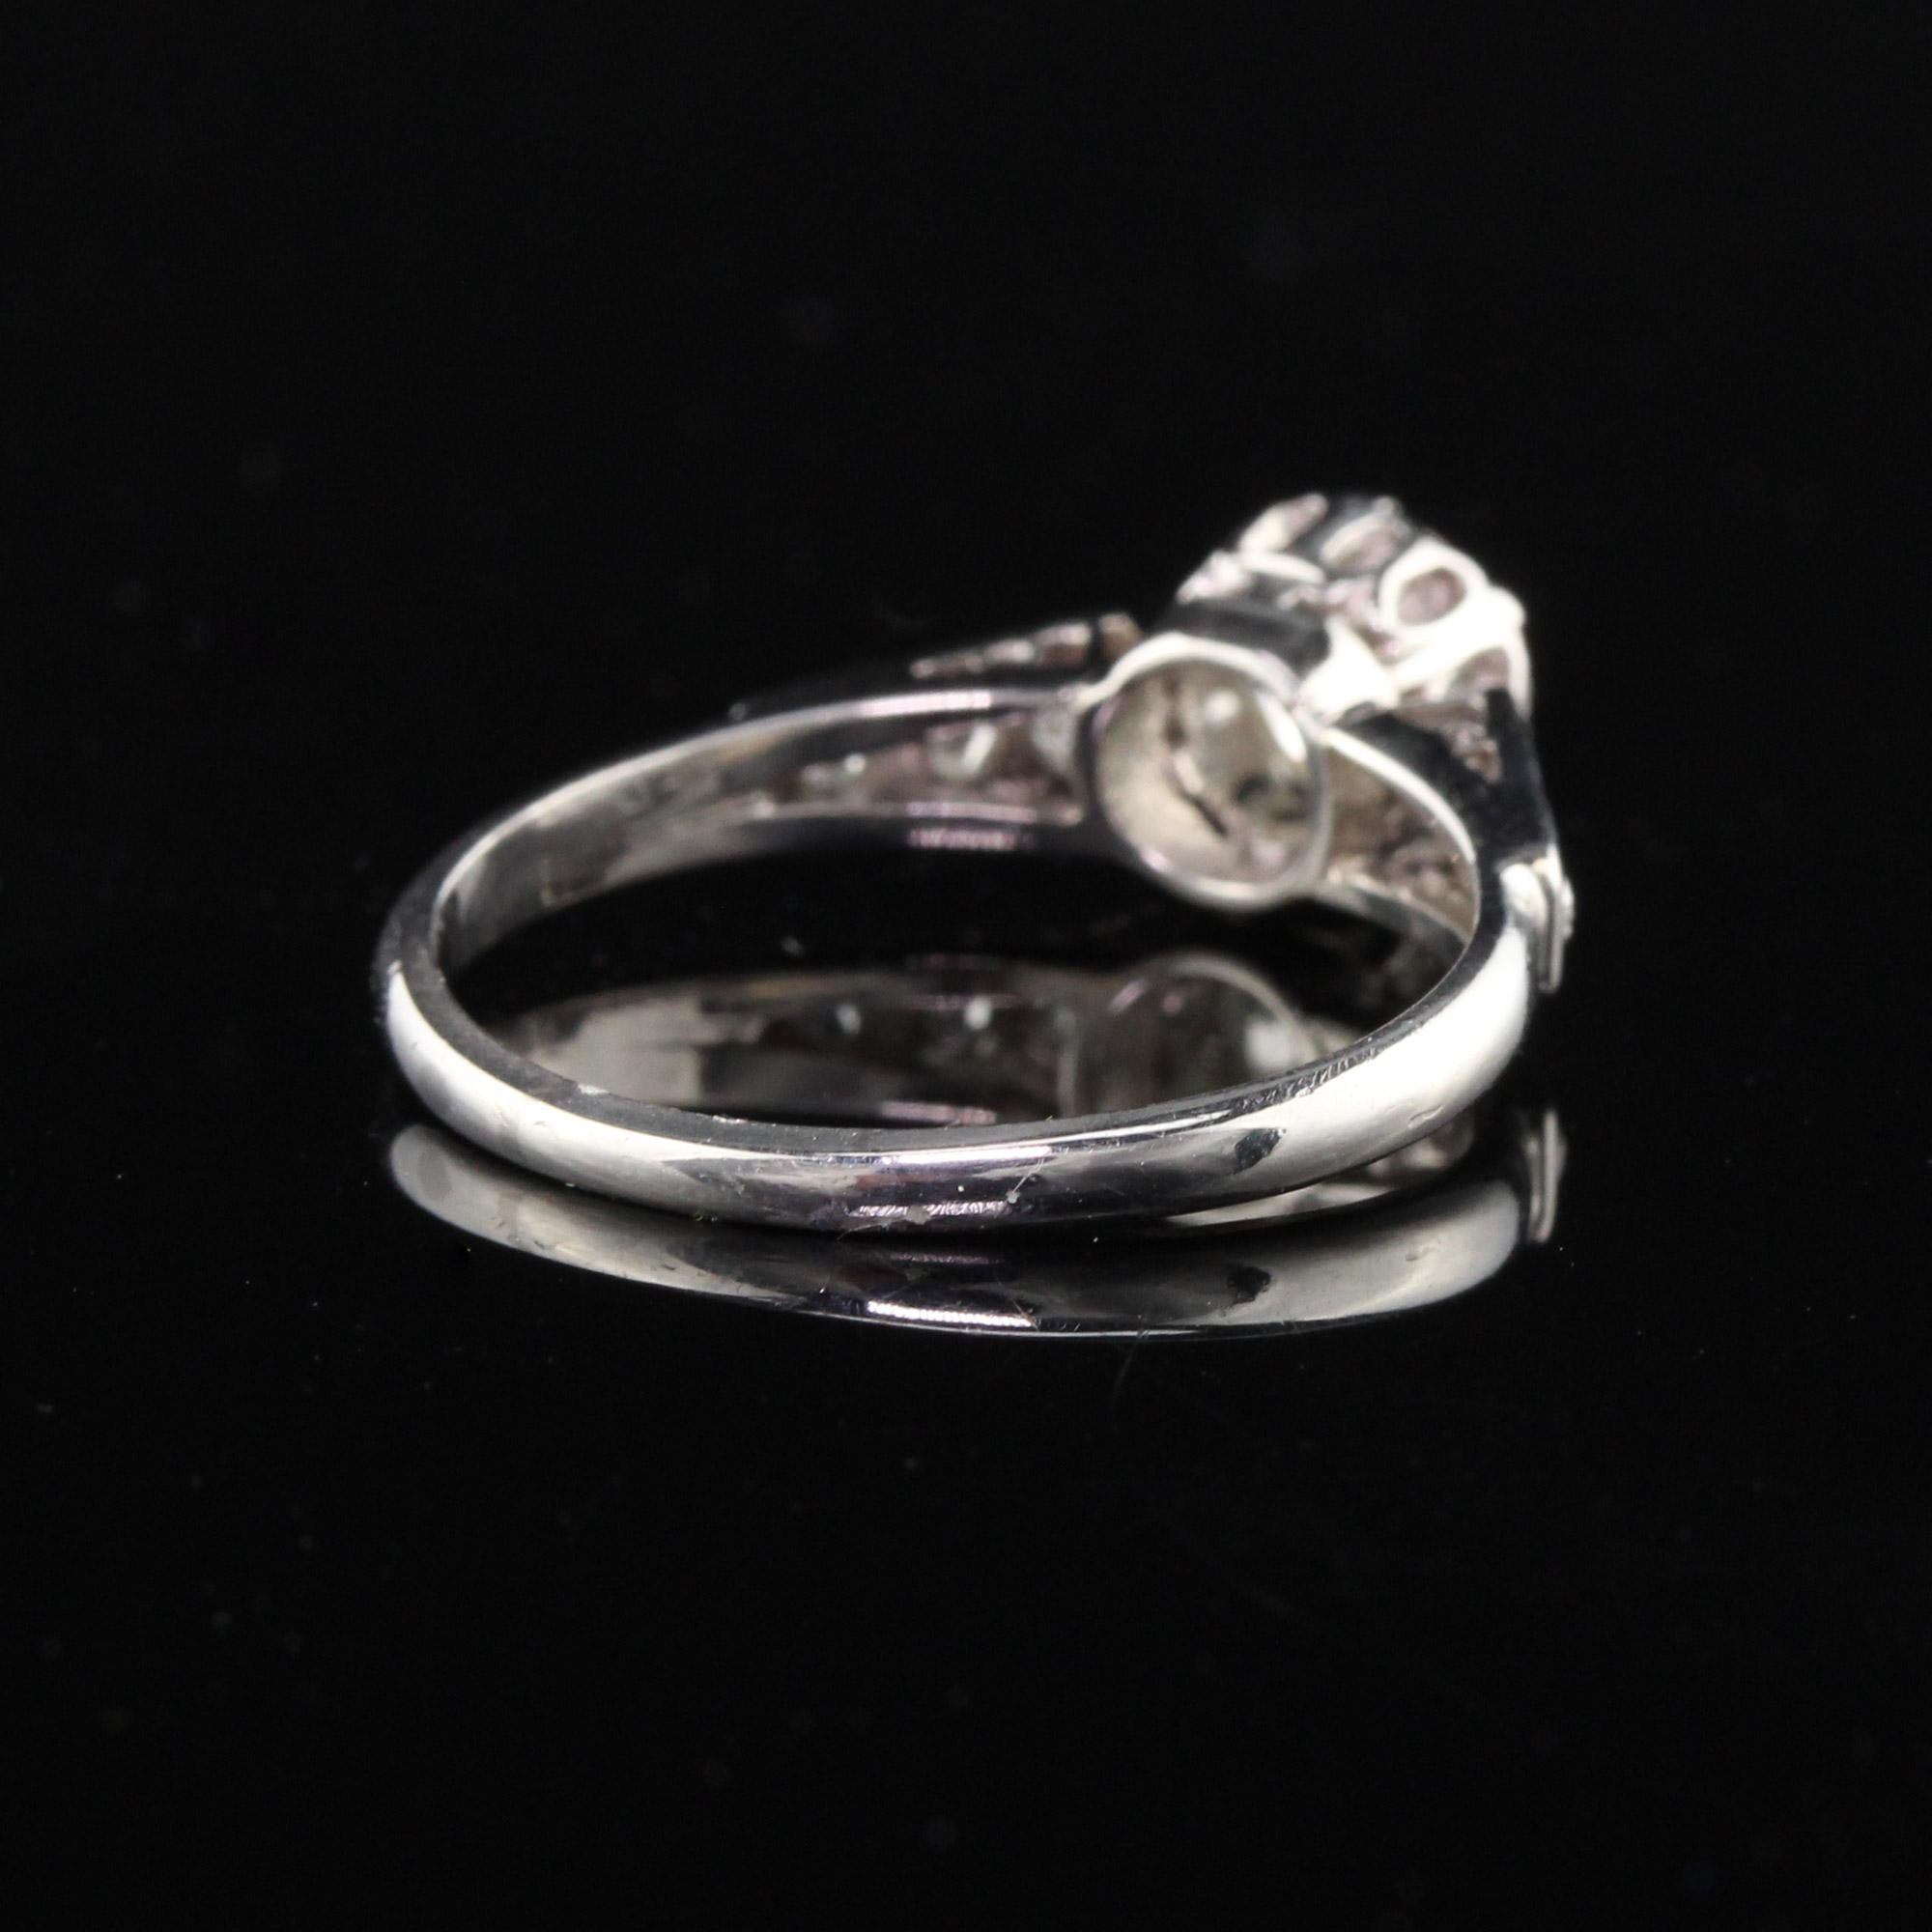 Antique Edwardian Platinum Old European Cut Diamond Engagement Ring 1